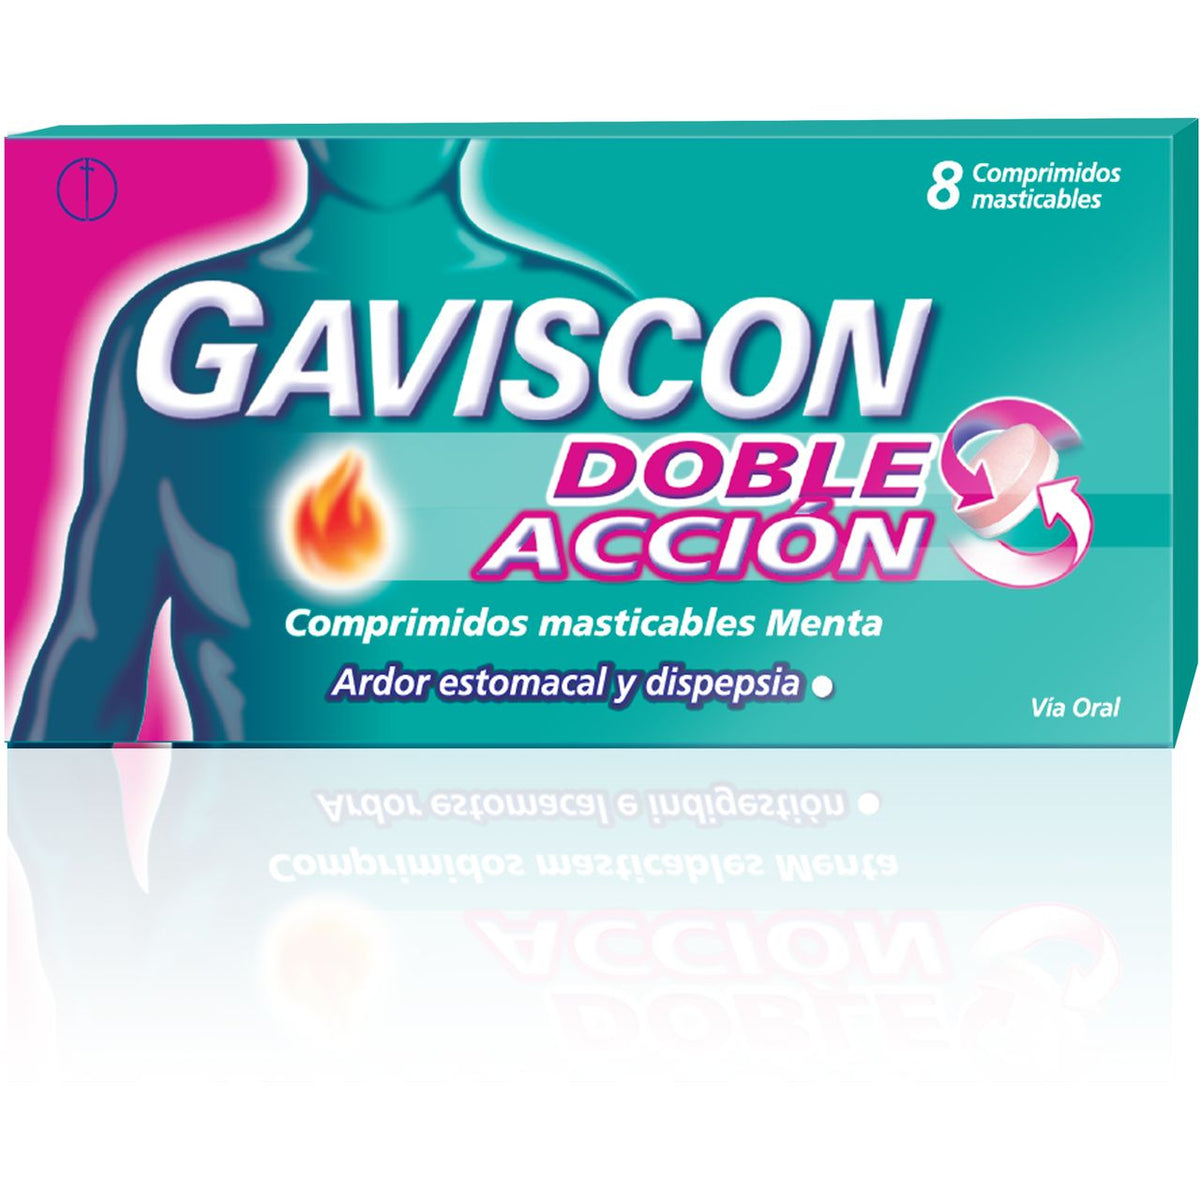 Gaviscon Doble Acción Comprimidos masticables